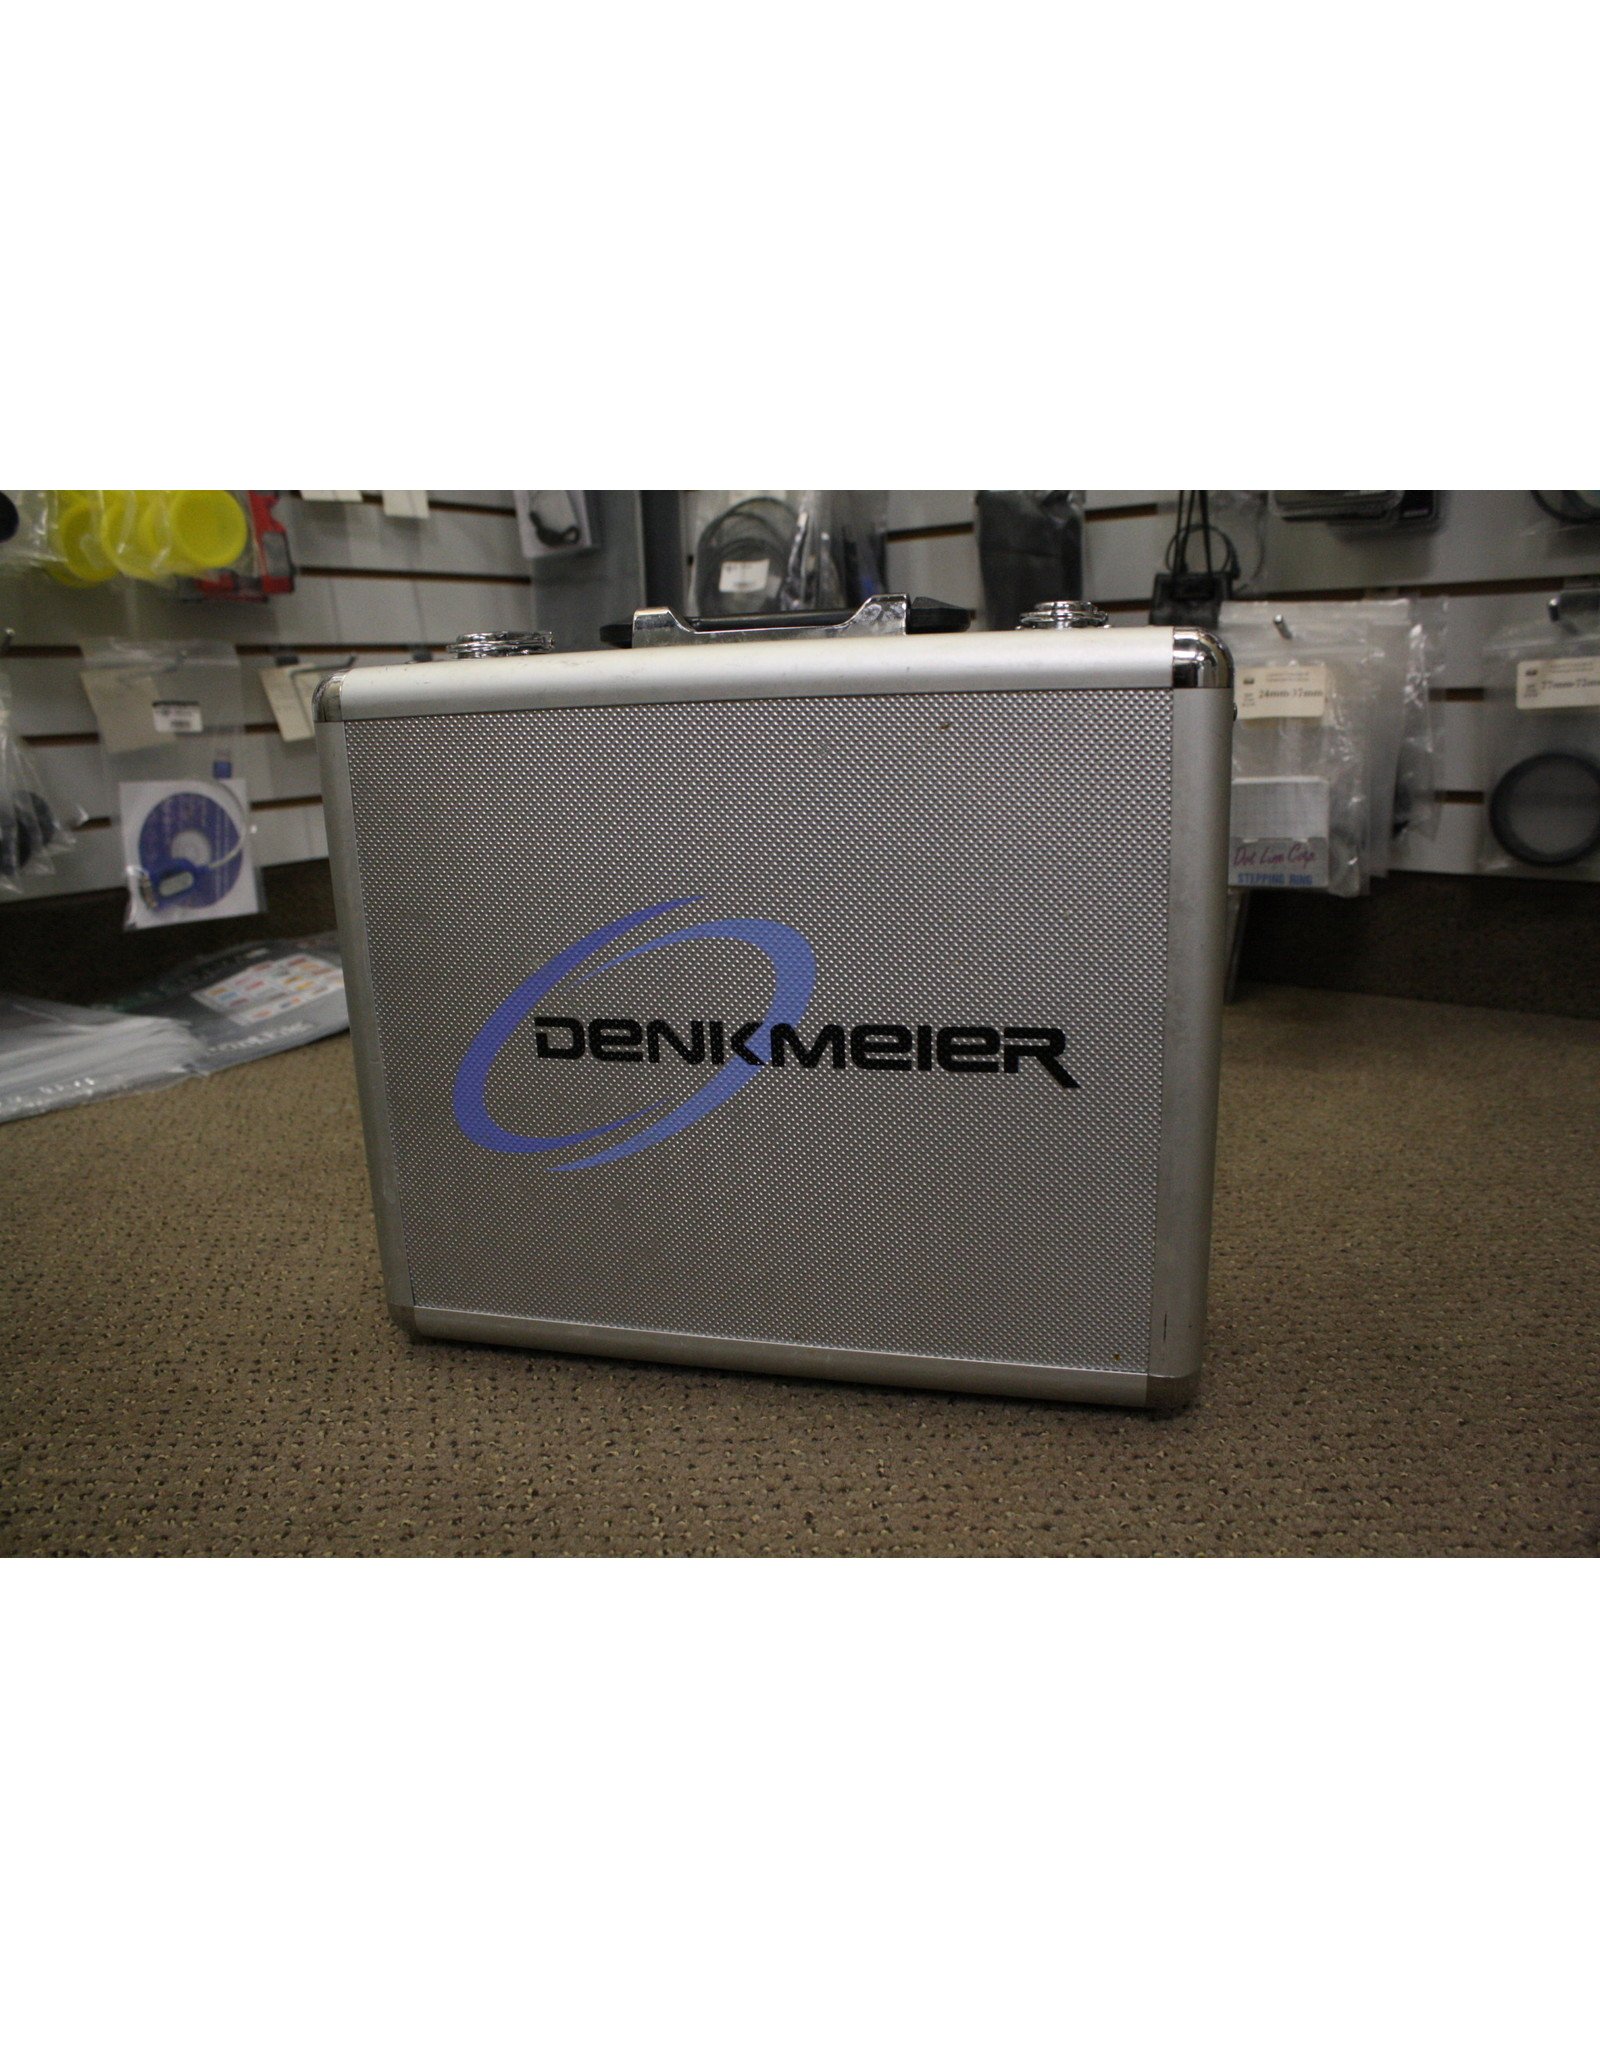 Denkmeier Denkmeier II BinoViewer with 2" Multiple OCS and Two Meade 26mm Super Plossls(Pre-owned)